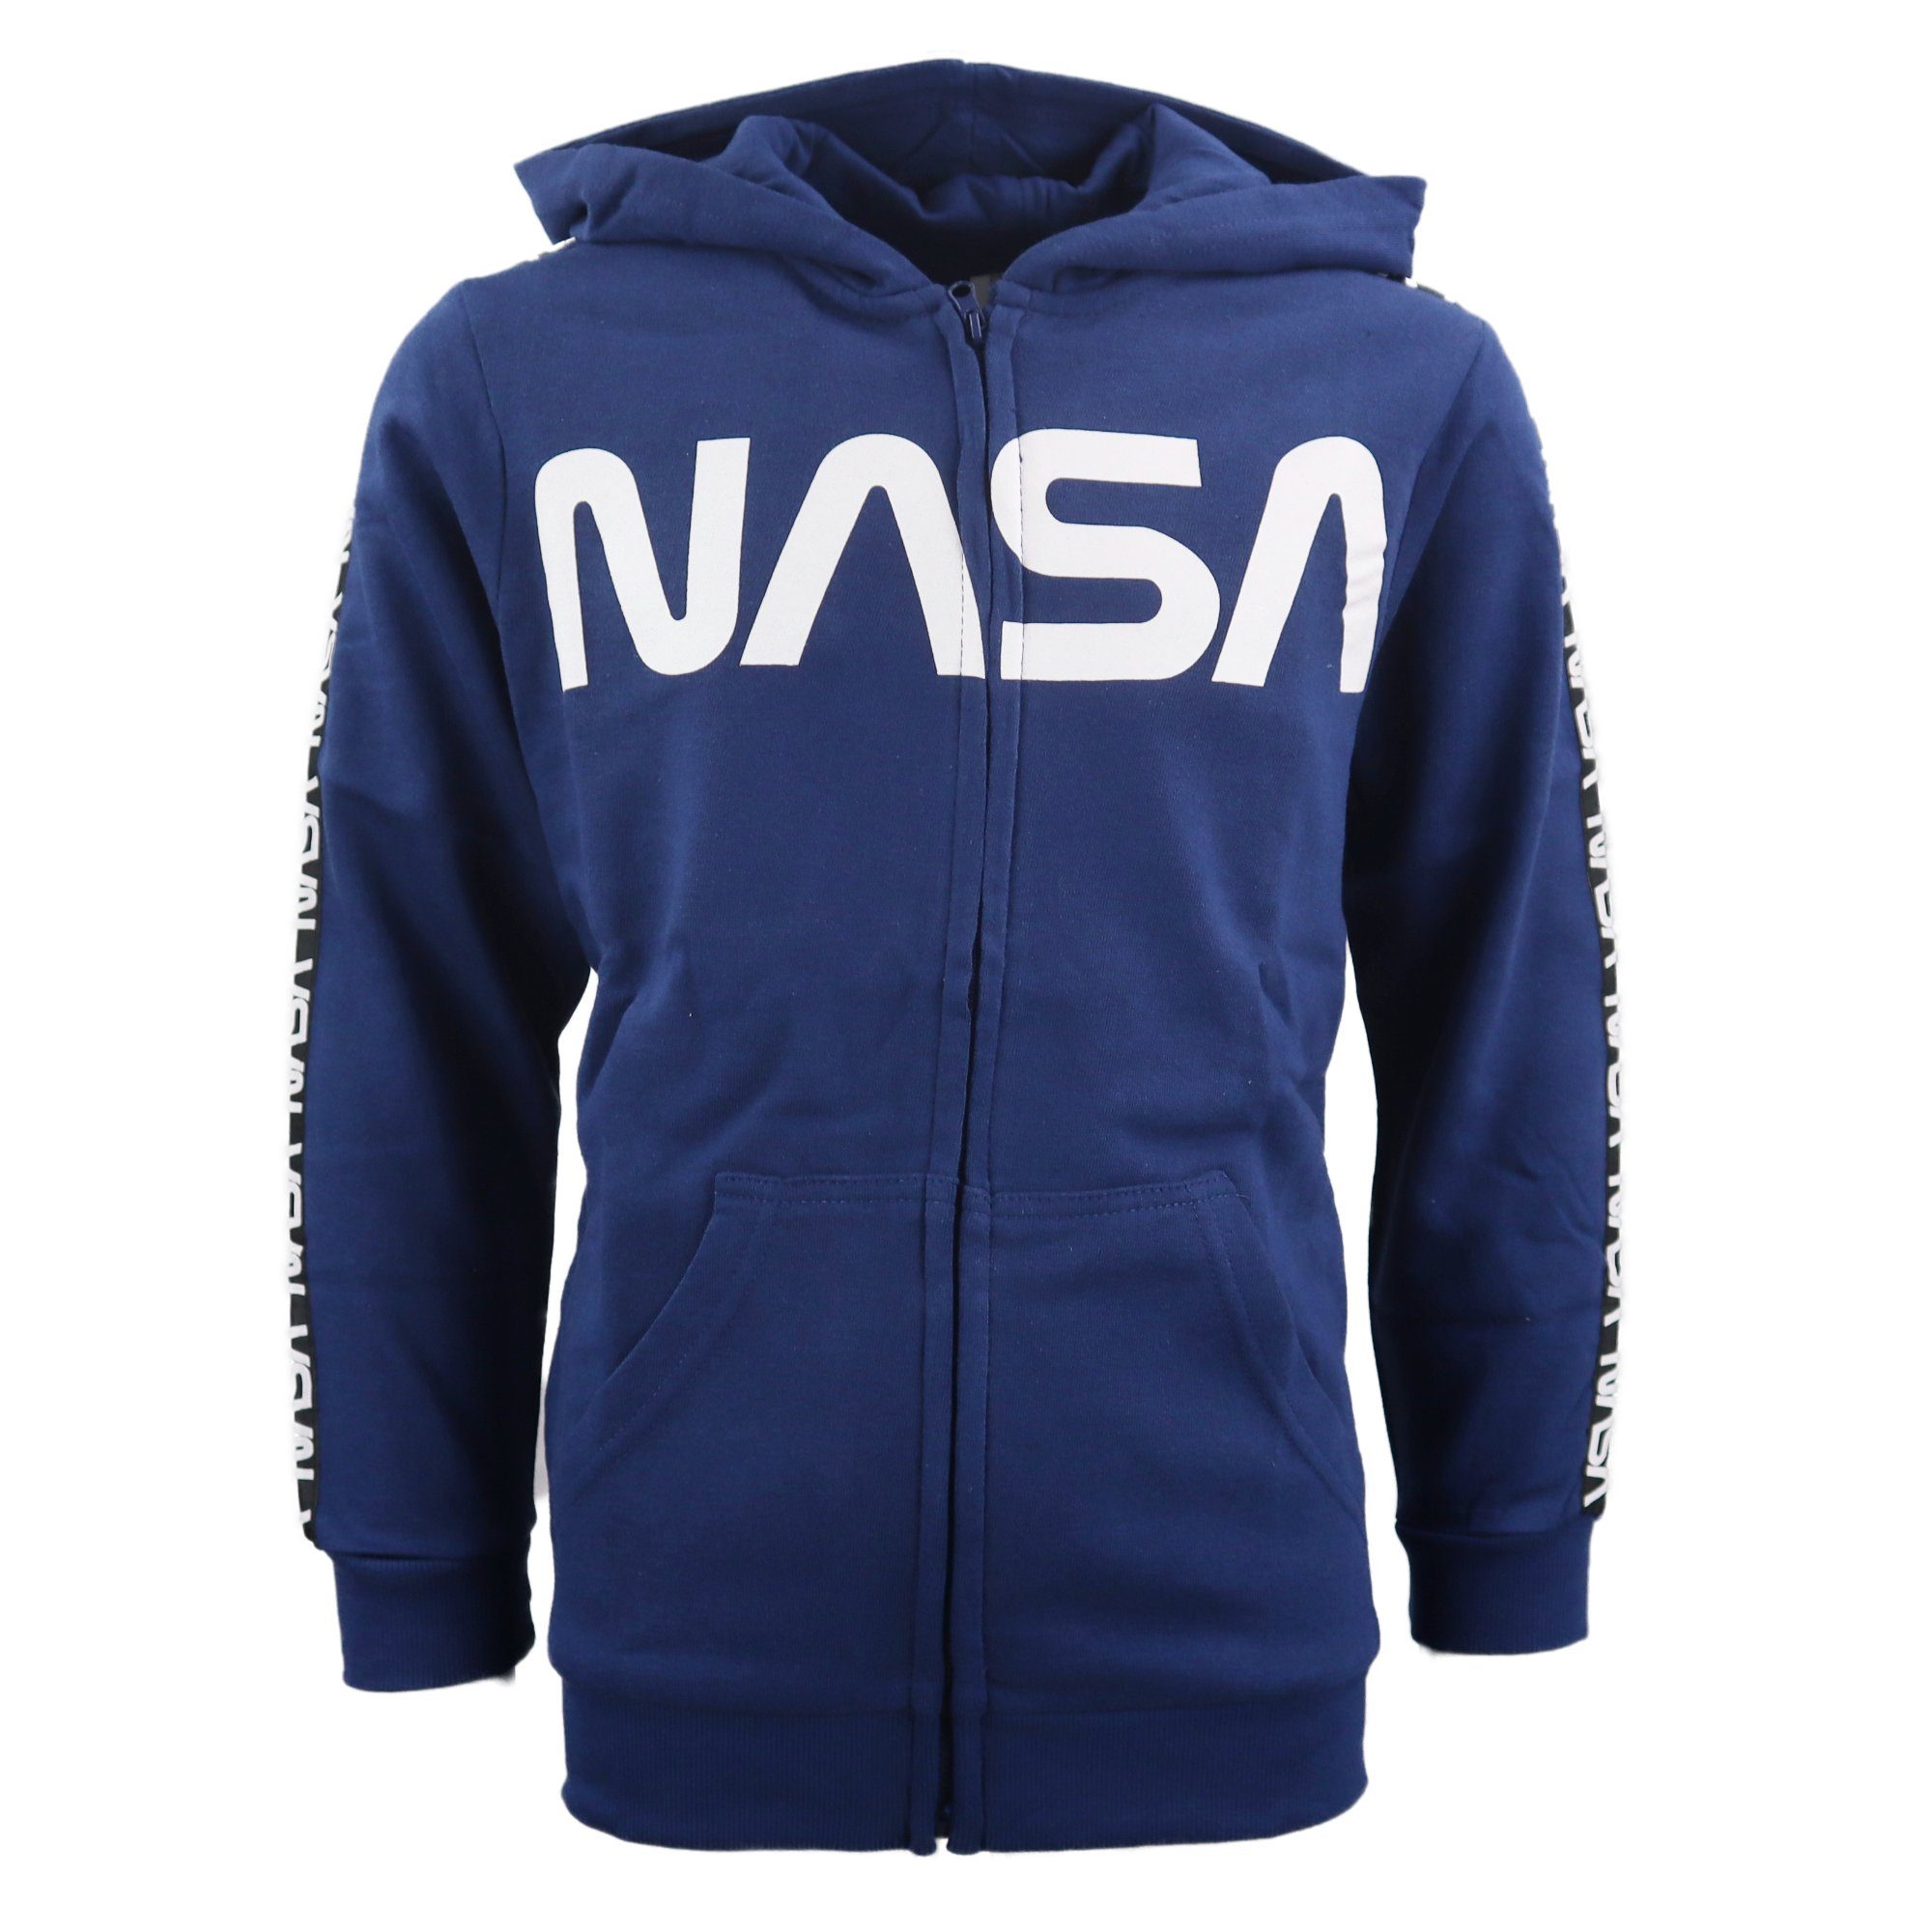 NASA Hoodie NASA Jugend Gr. Kinder Baumwolle, Jungen Pulli bis Kapuzen Blau 164, 100% 134